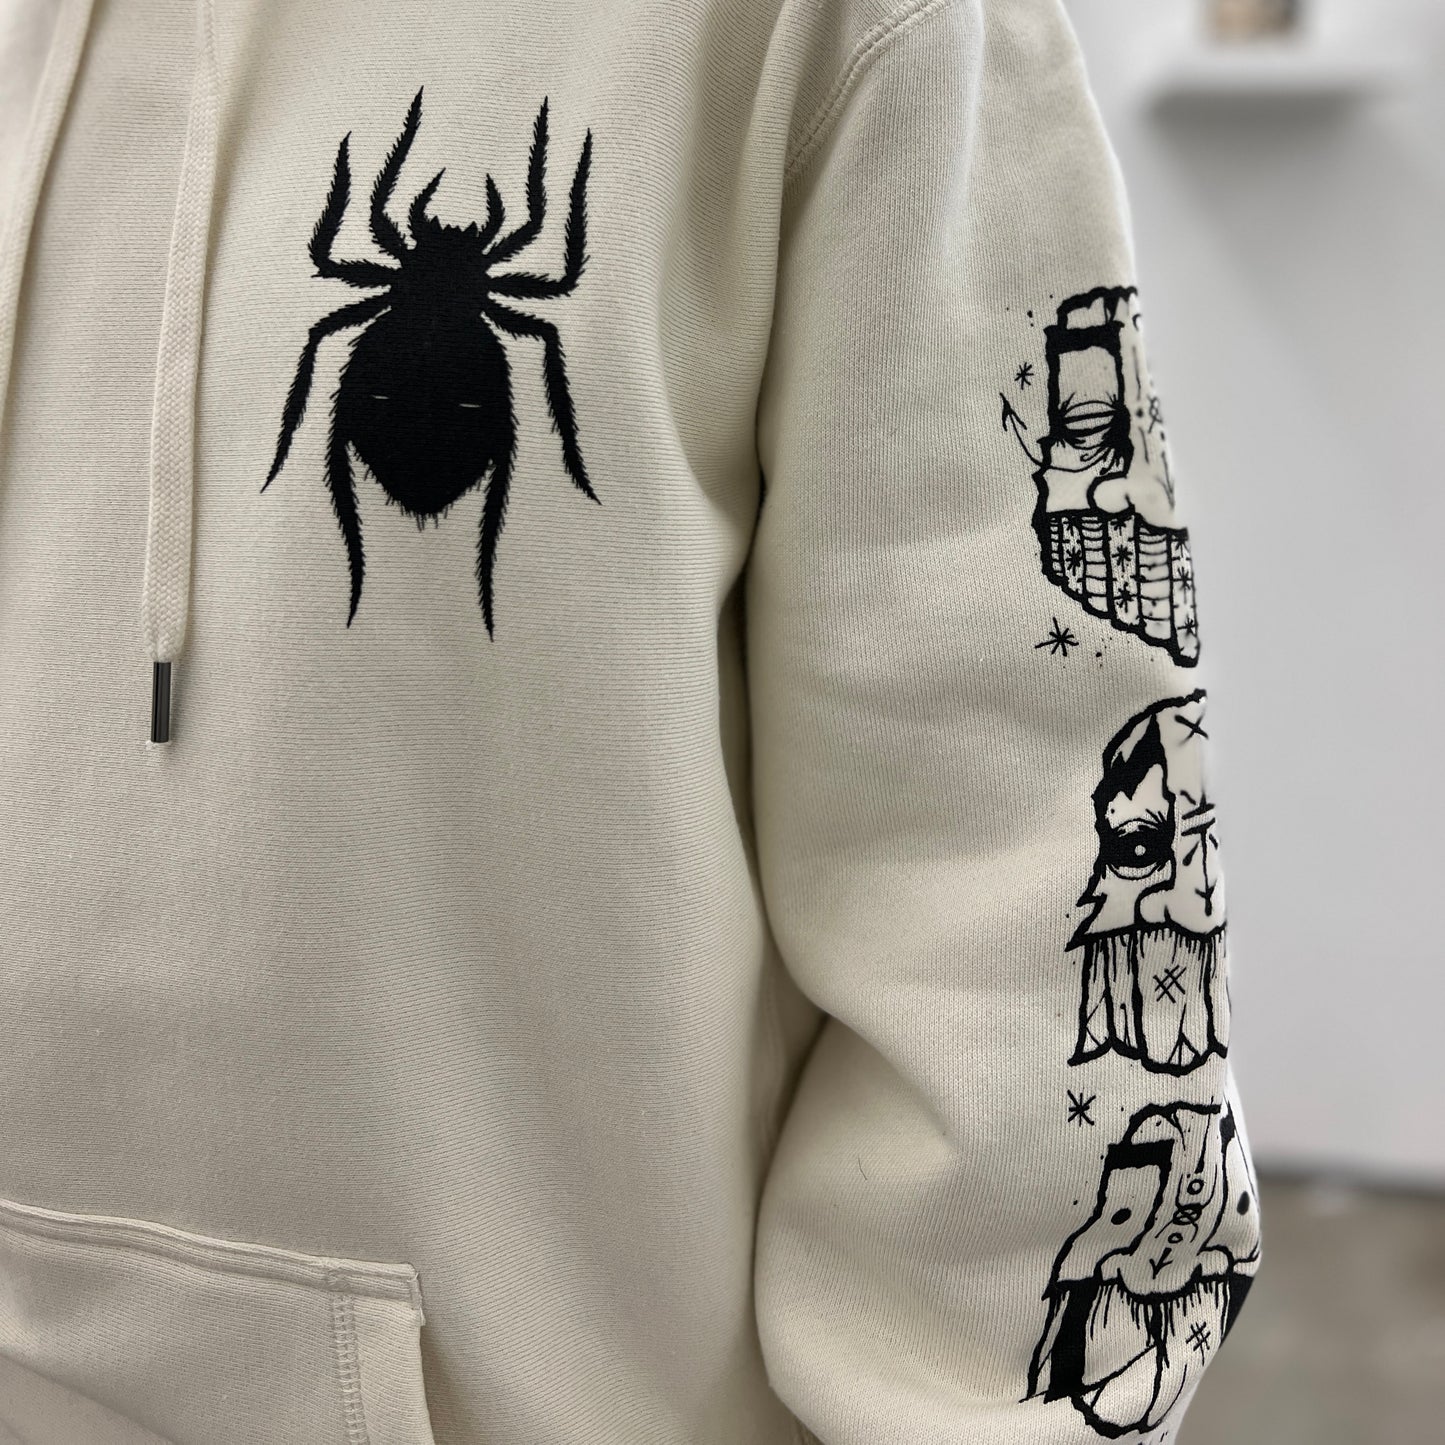  by GATS titled GATS - "Arachnophile" Hooded Sweatshirt in Bone